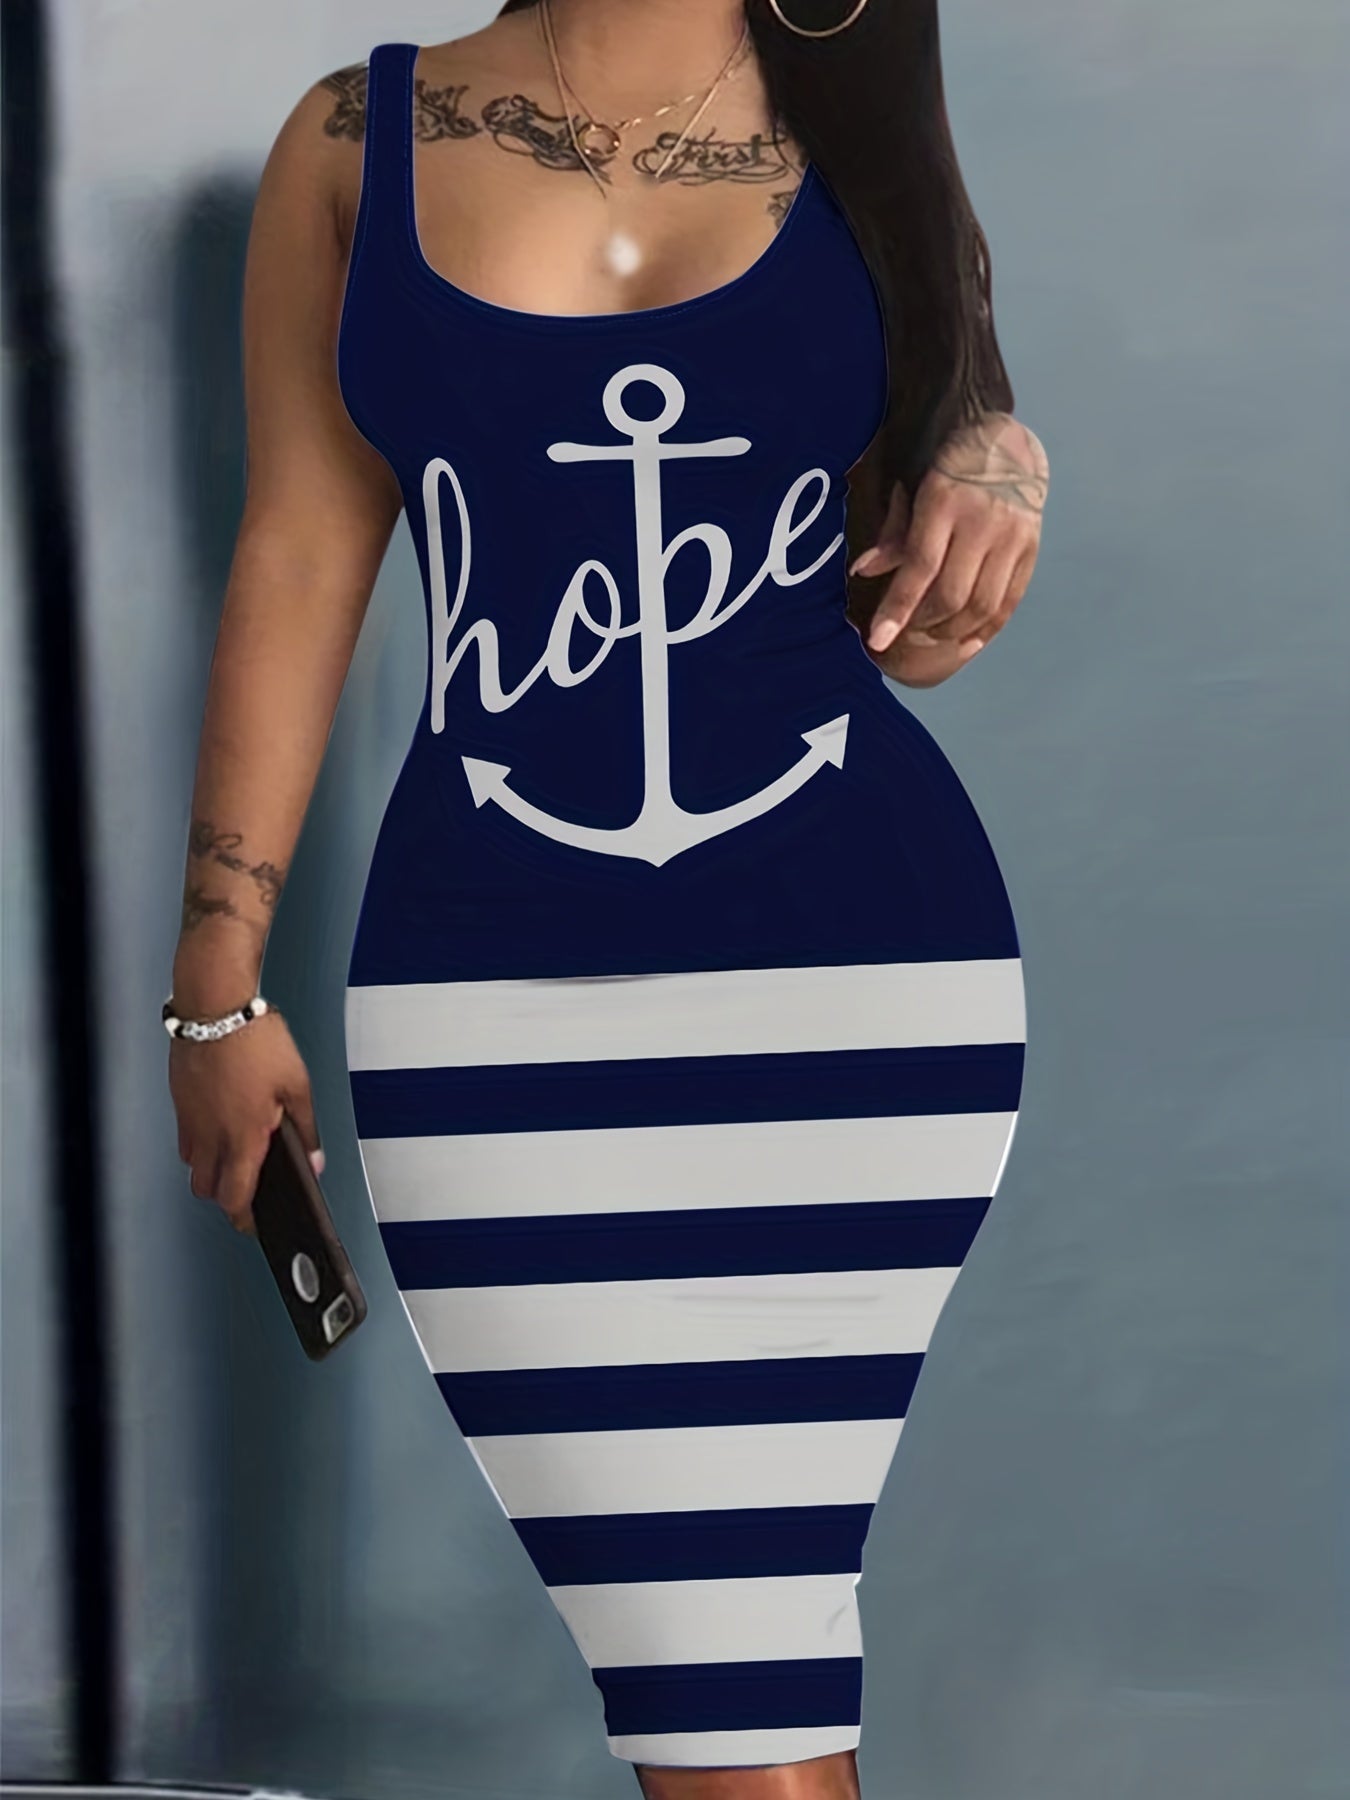 Hope Anchor Women's Christian Casual Dress claimedbygoddesigns